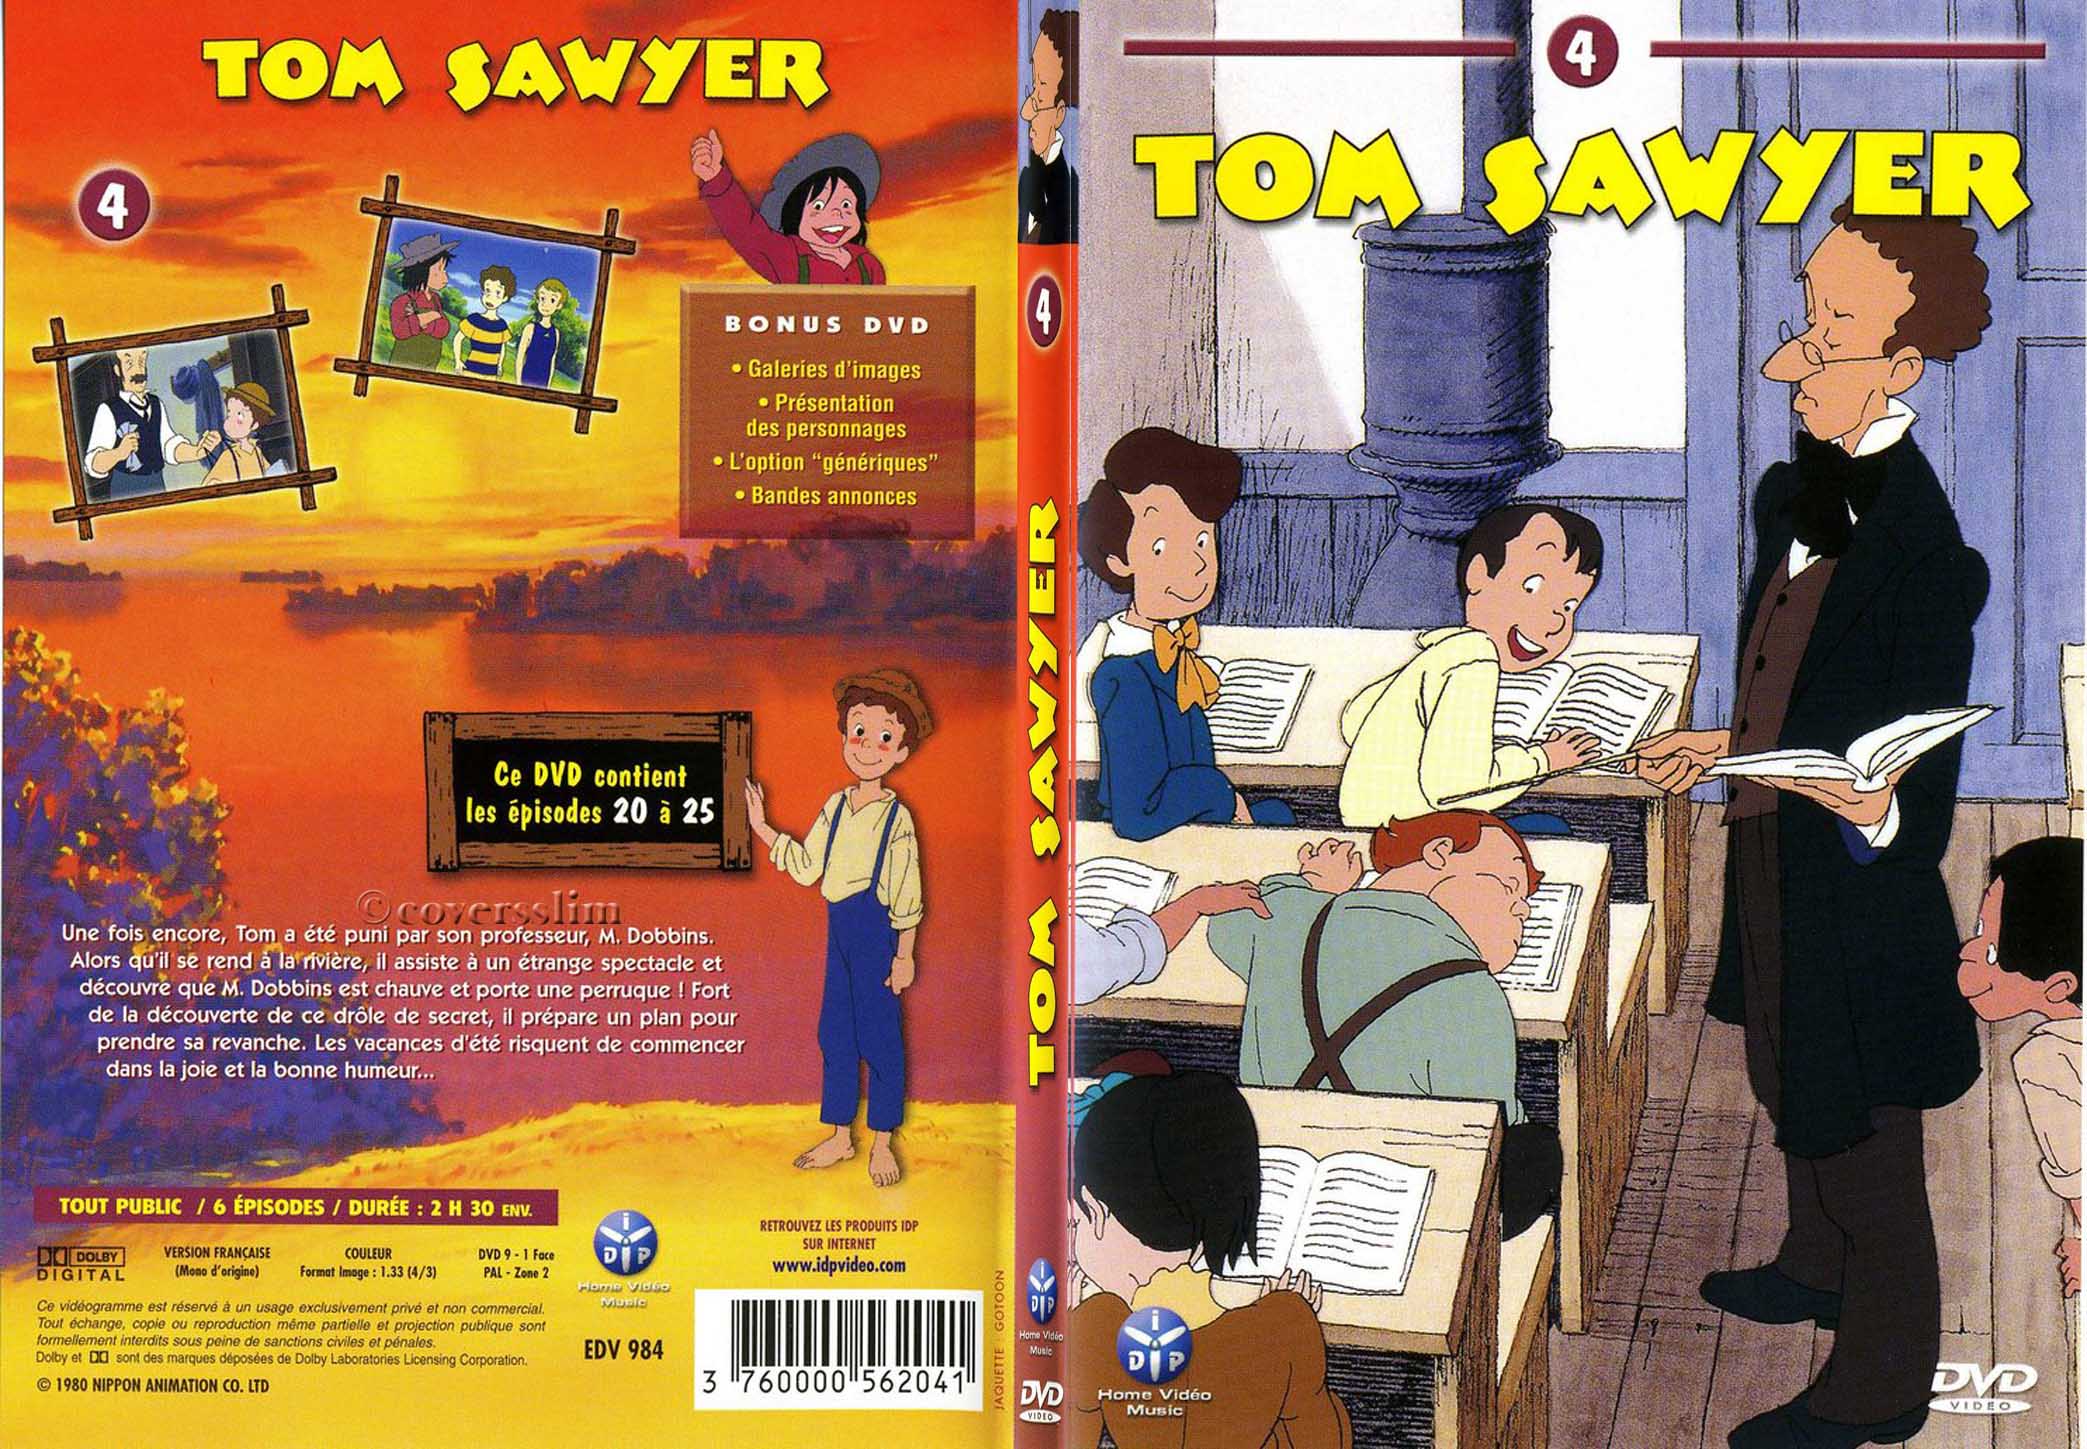 Jaquette DVD Tom Sawyer vol 4 - SLIM